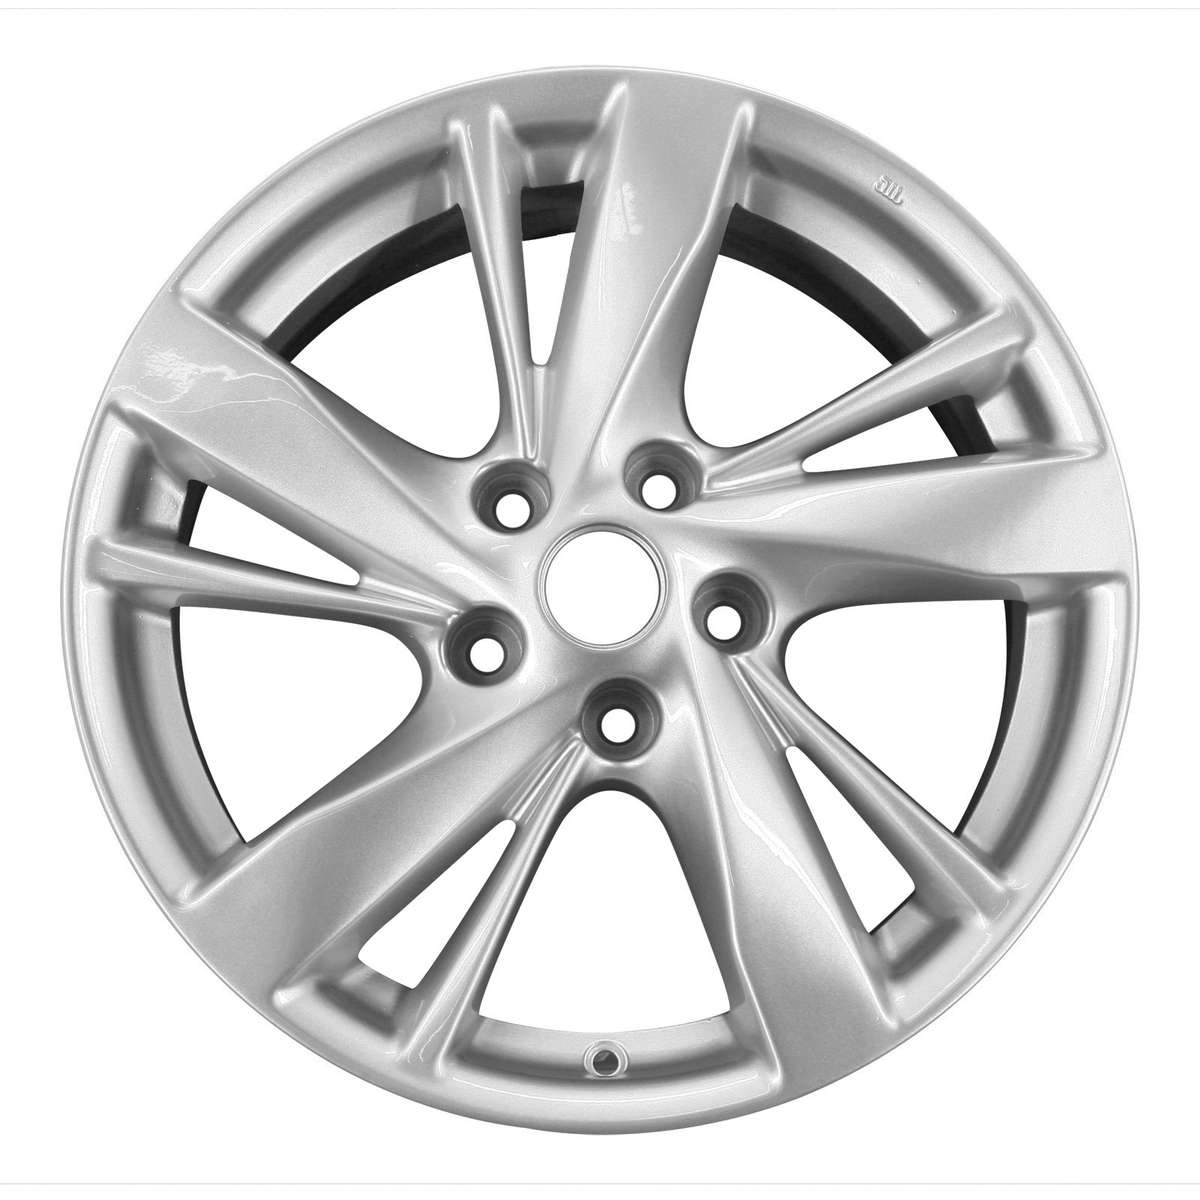 2014 Nissan Altima New 17" Replacement Wheel Rim RW62593S